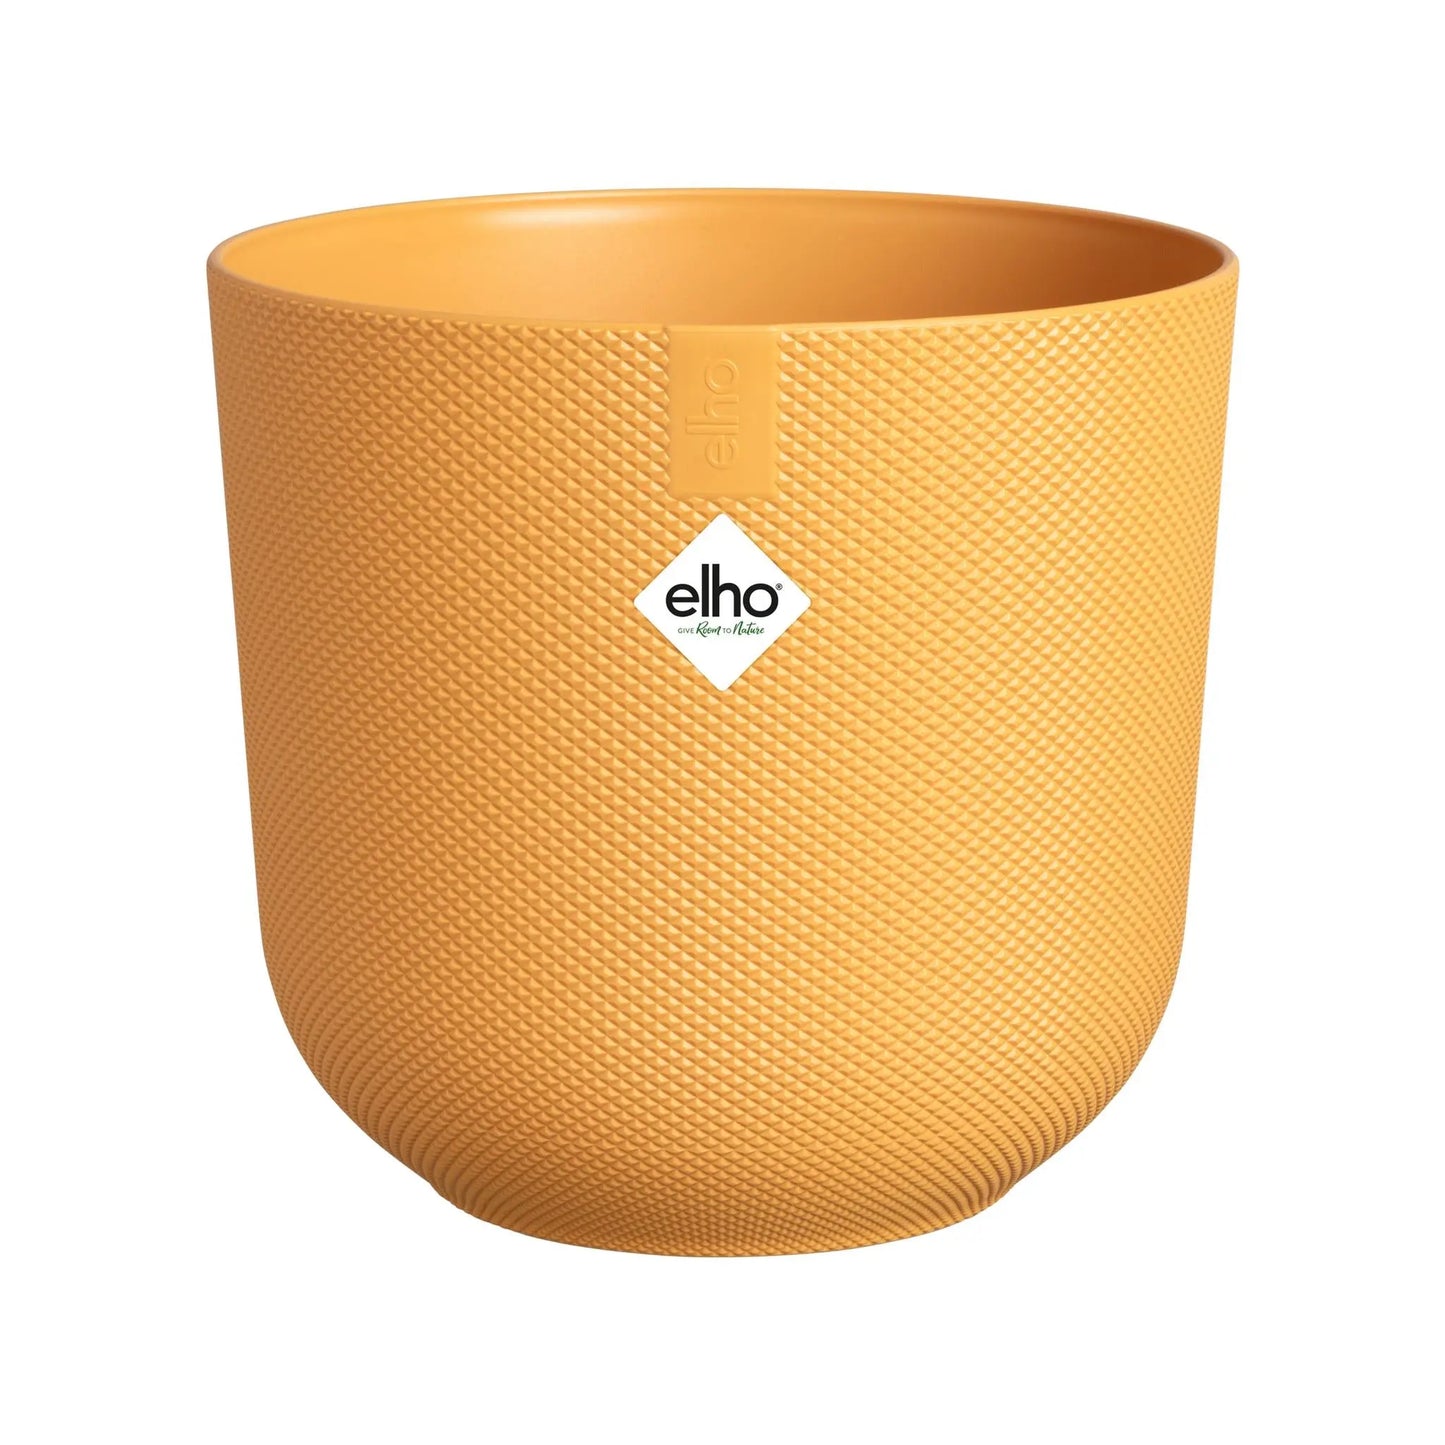 Pot elho Jazz Round amber yellow - D19 x H18 Everspring